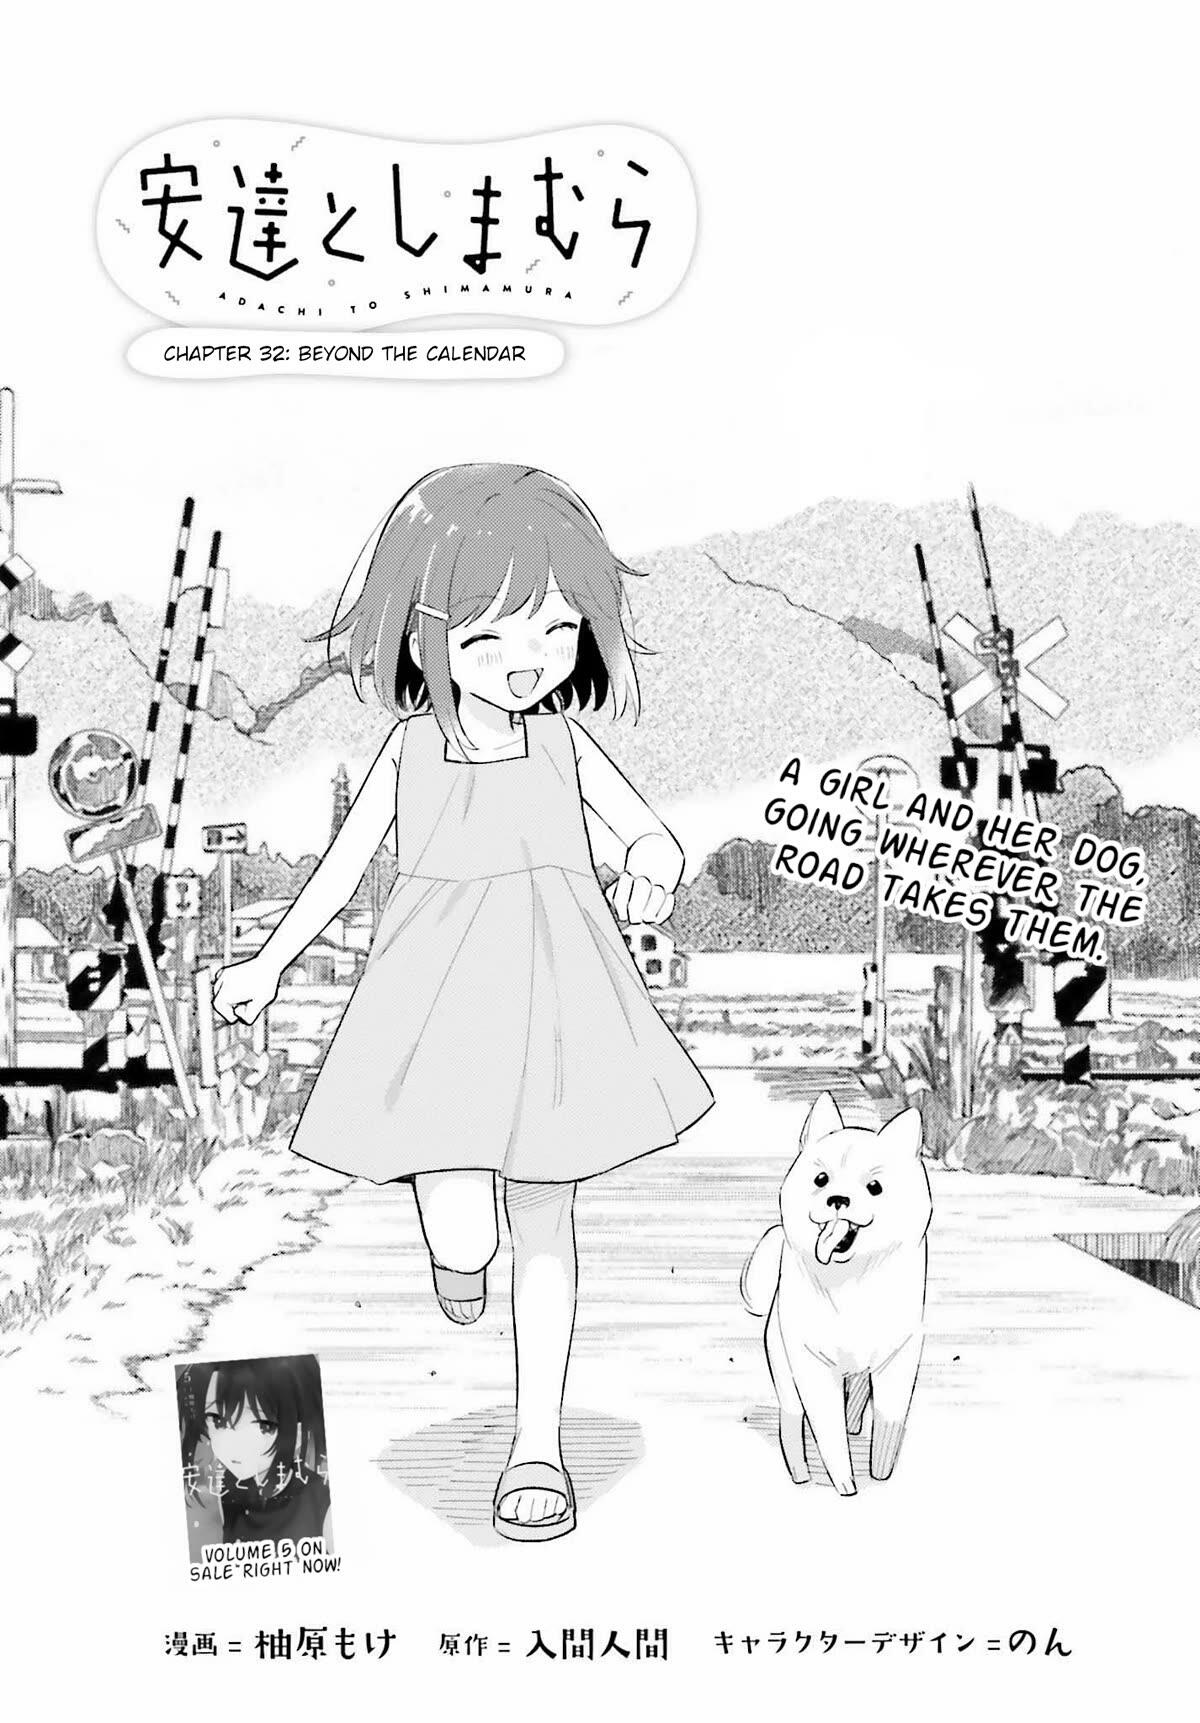 Read Adachi To Shimamura (Moke Yuzuhara) Chapter 30.1: Adachi Revival on  Mangakakalot